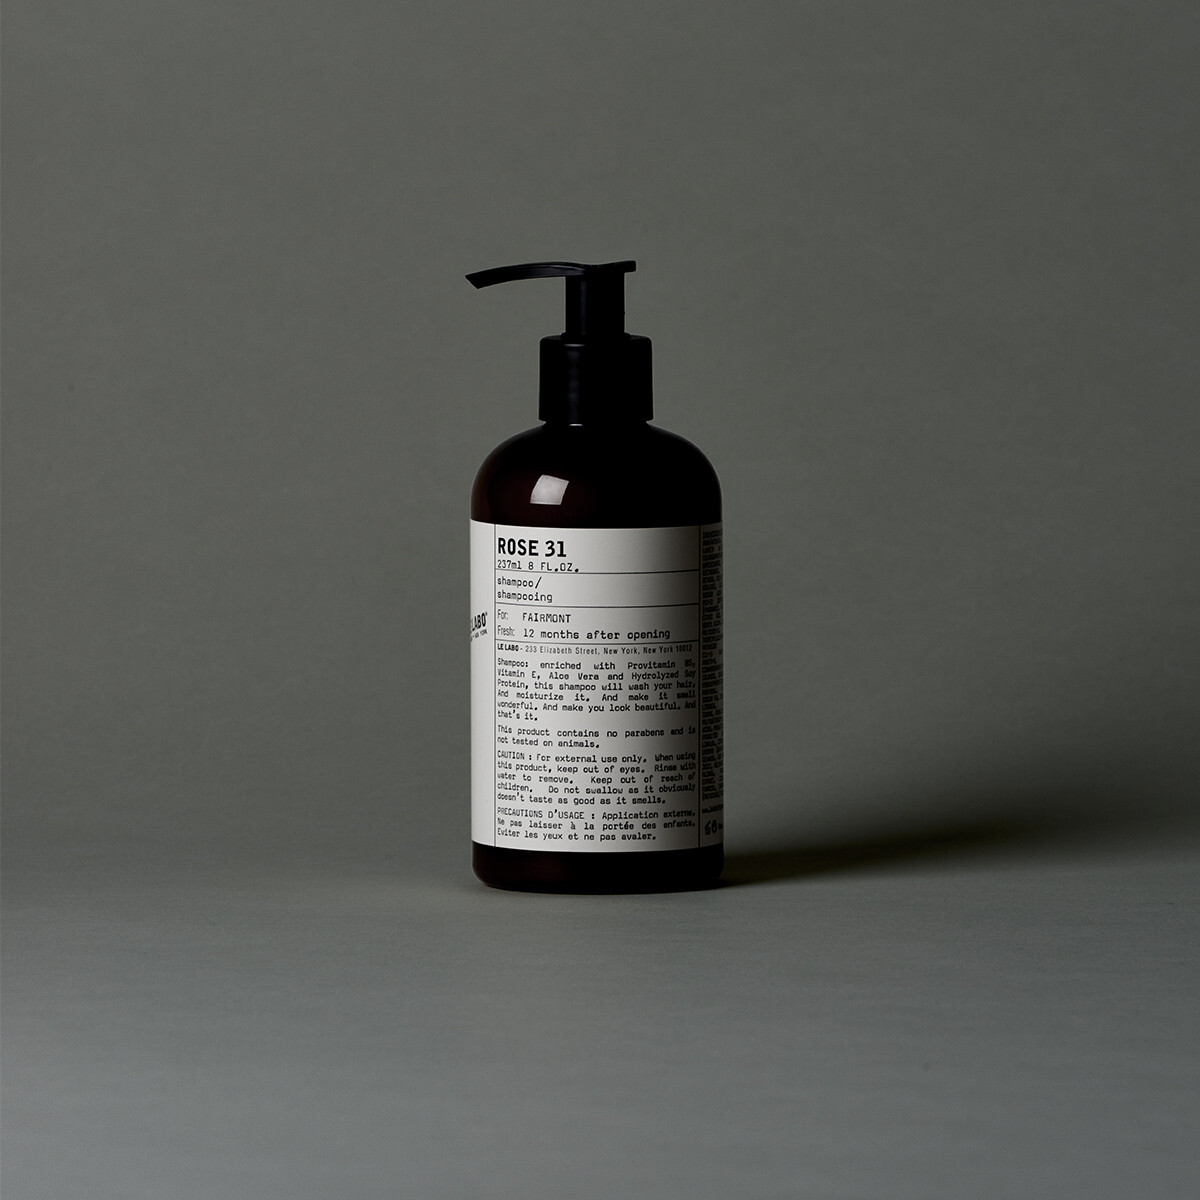 ROSE 31 | Perfuming Shampoo | Le Labo Fragrances